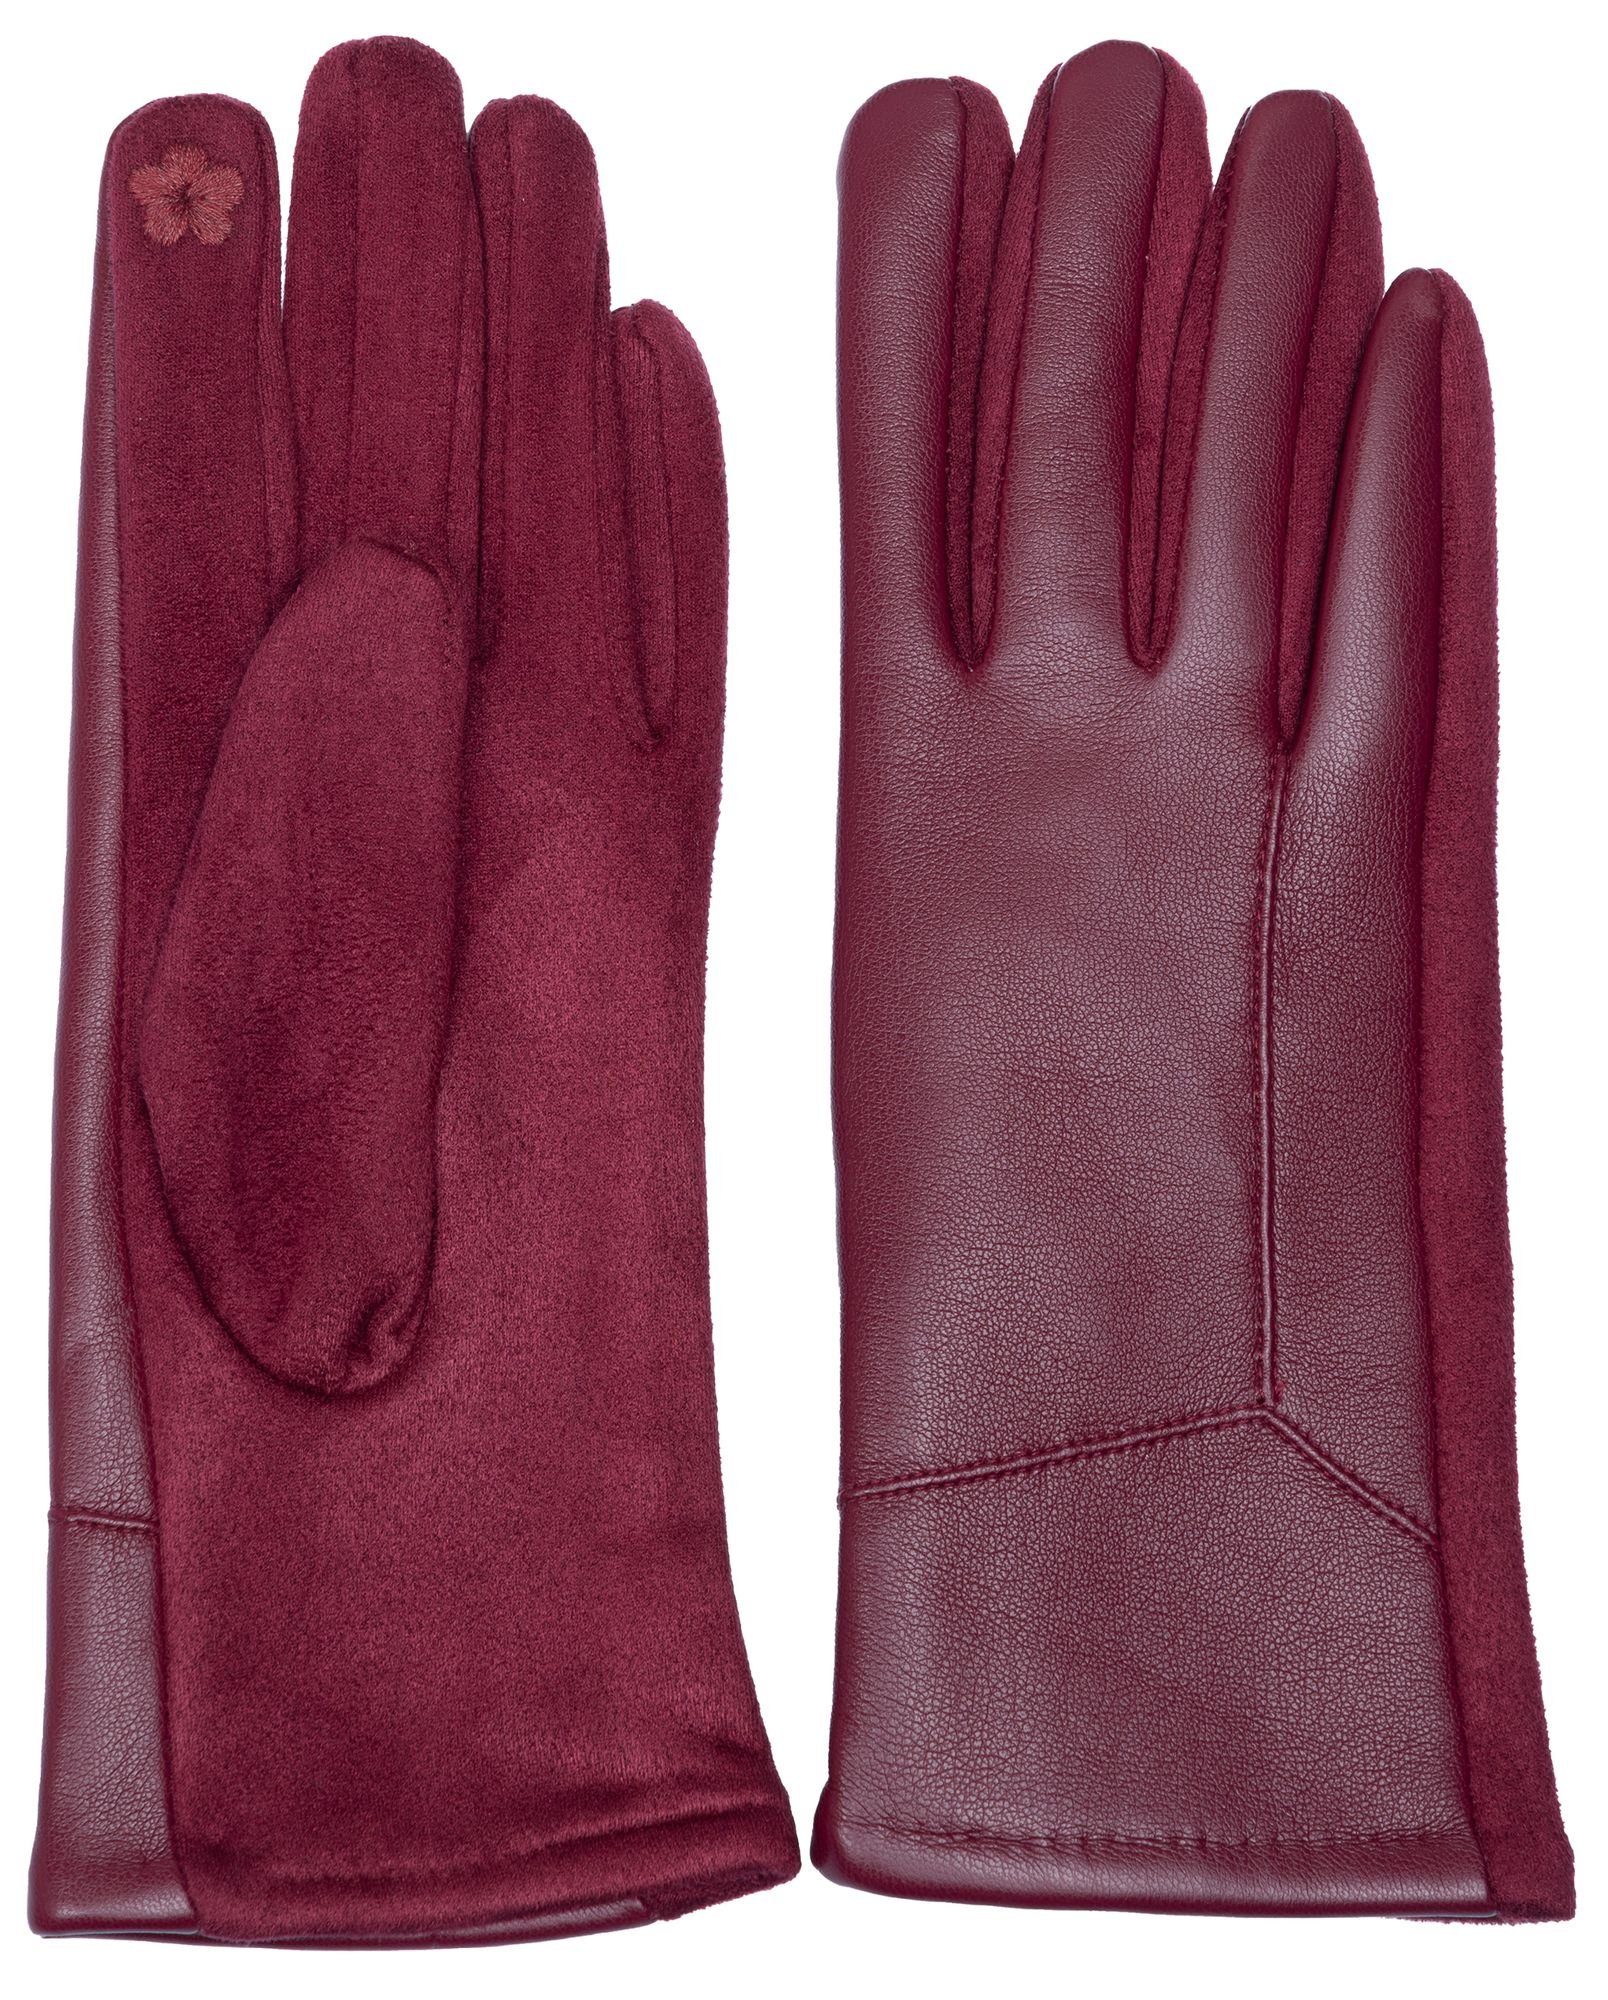 neu Caspar Strickhandschuhe weinrot Damen klassisch elegante Handschuhe uni GLV015